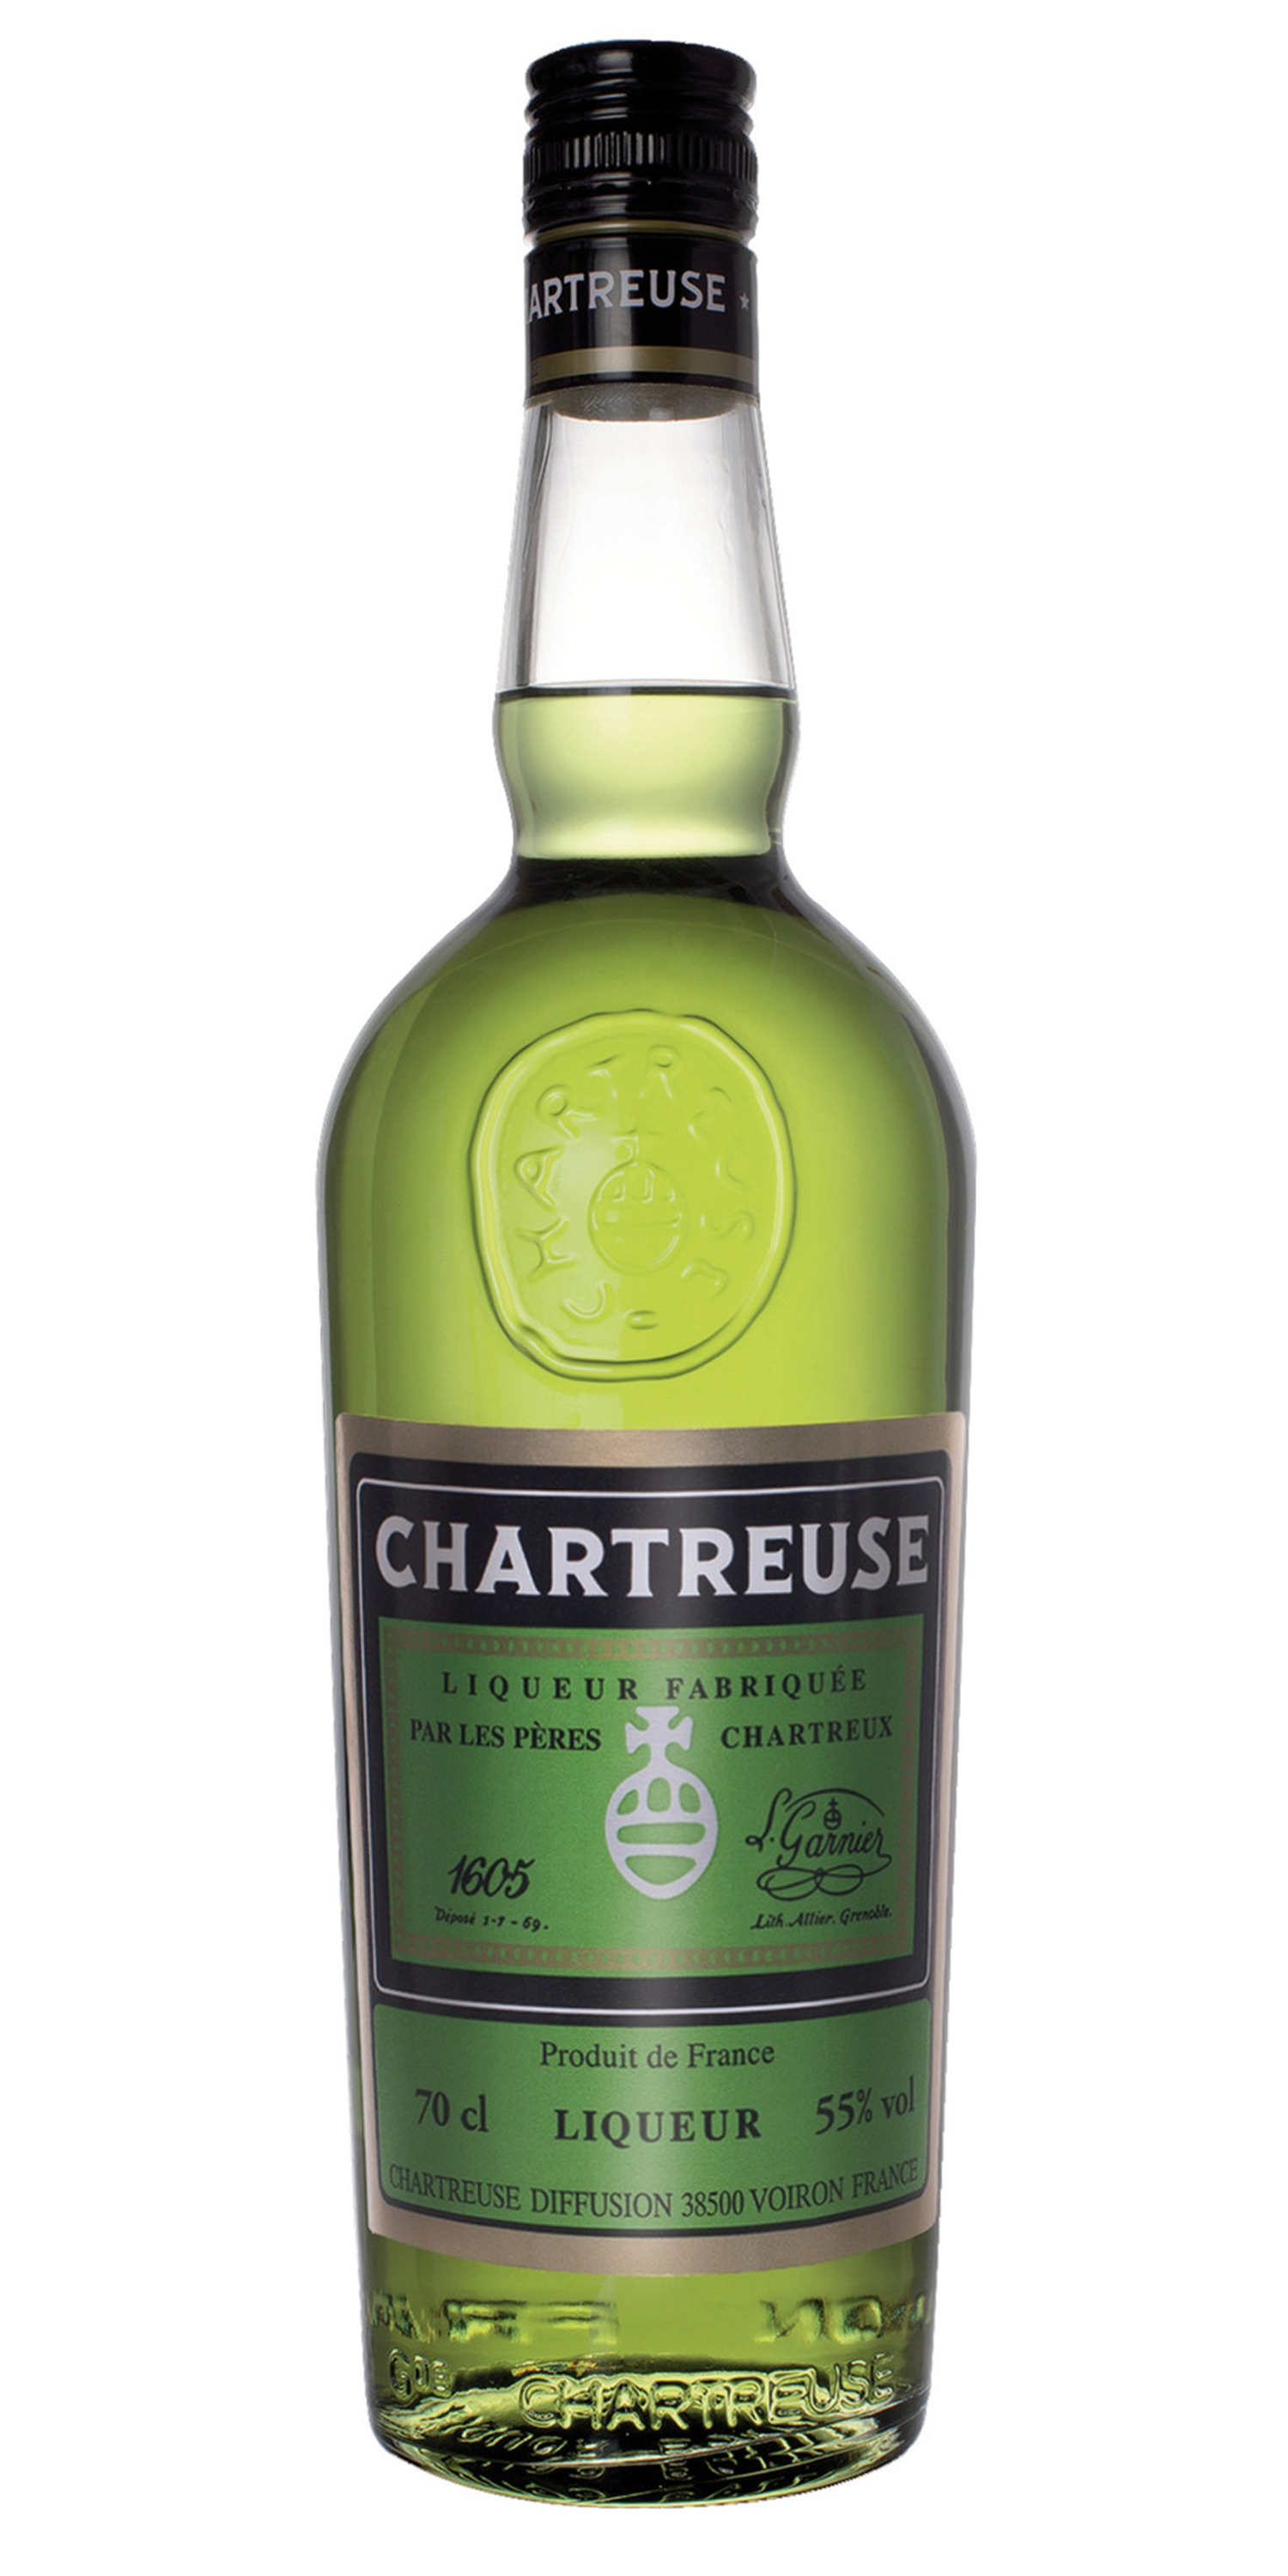 Spirit Chartreuse Verte *  Amstein SA - The beer ambassador